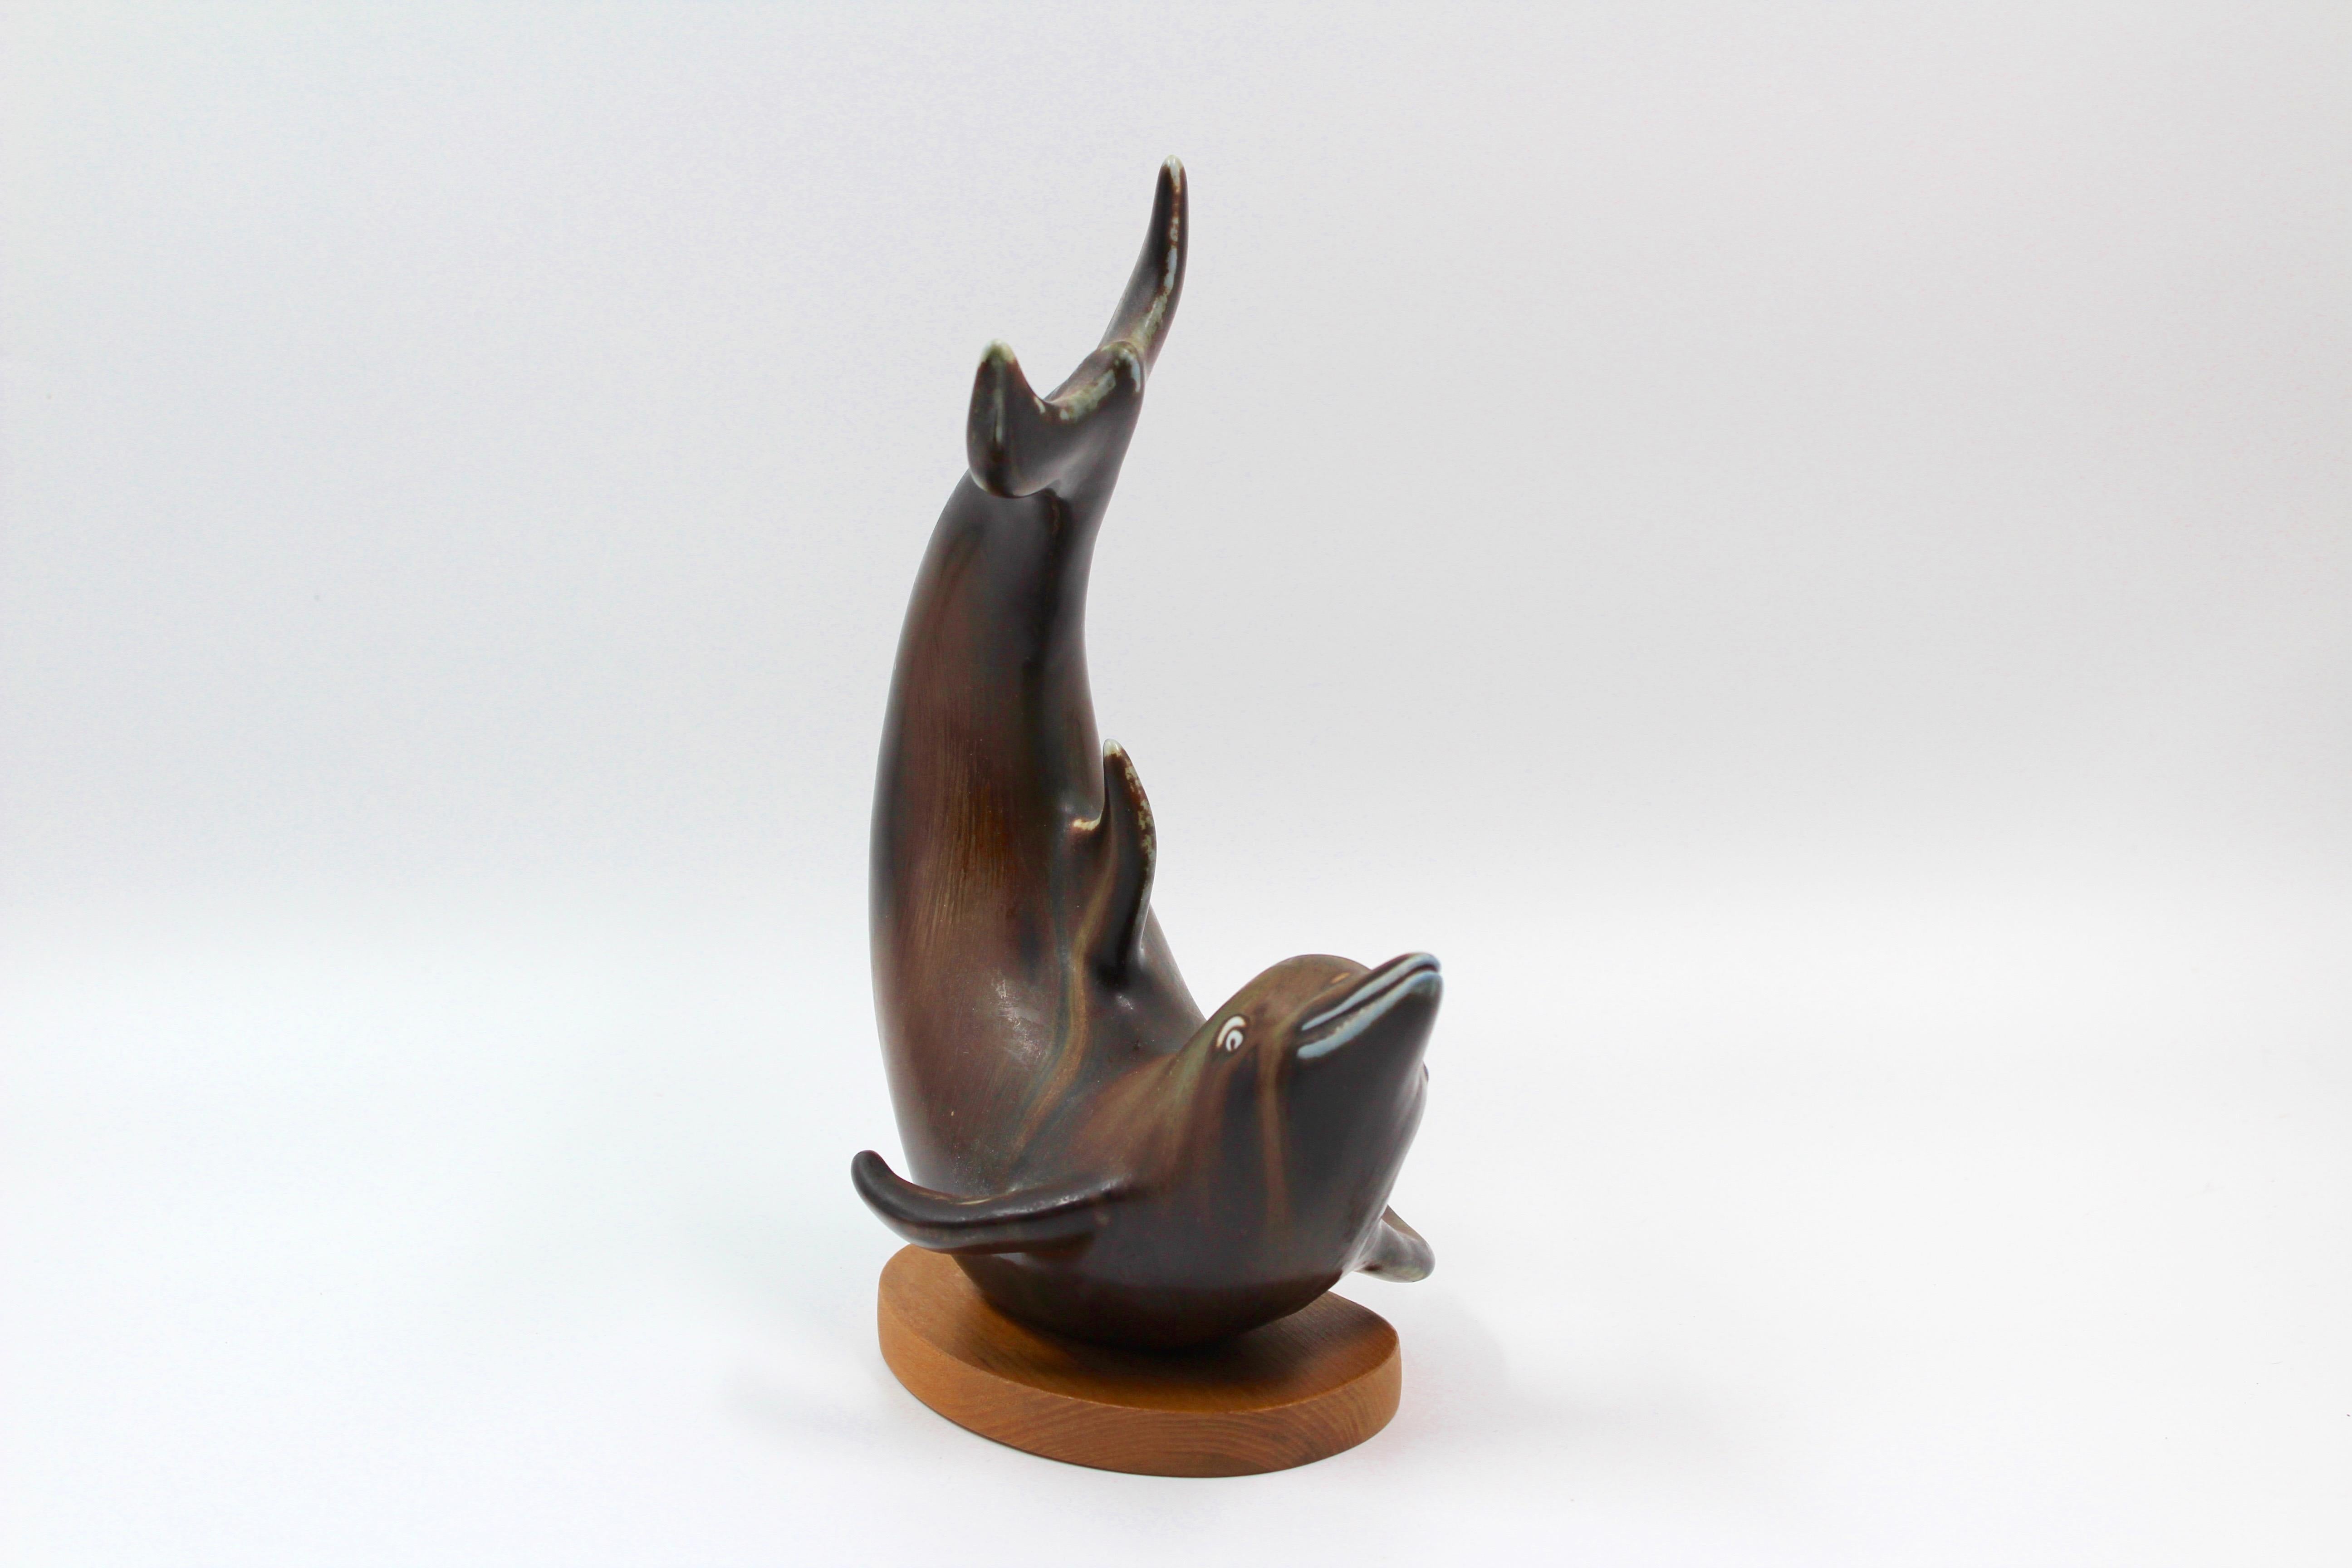 Scandinavian Modern Midcentury Ceramic Dolphin by Gunnar Nylund, Rörstrand, 1950s For Sale